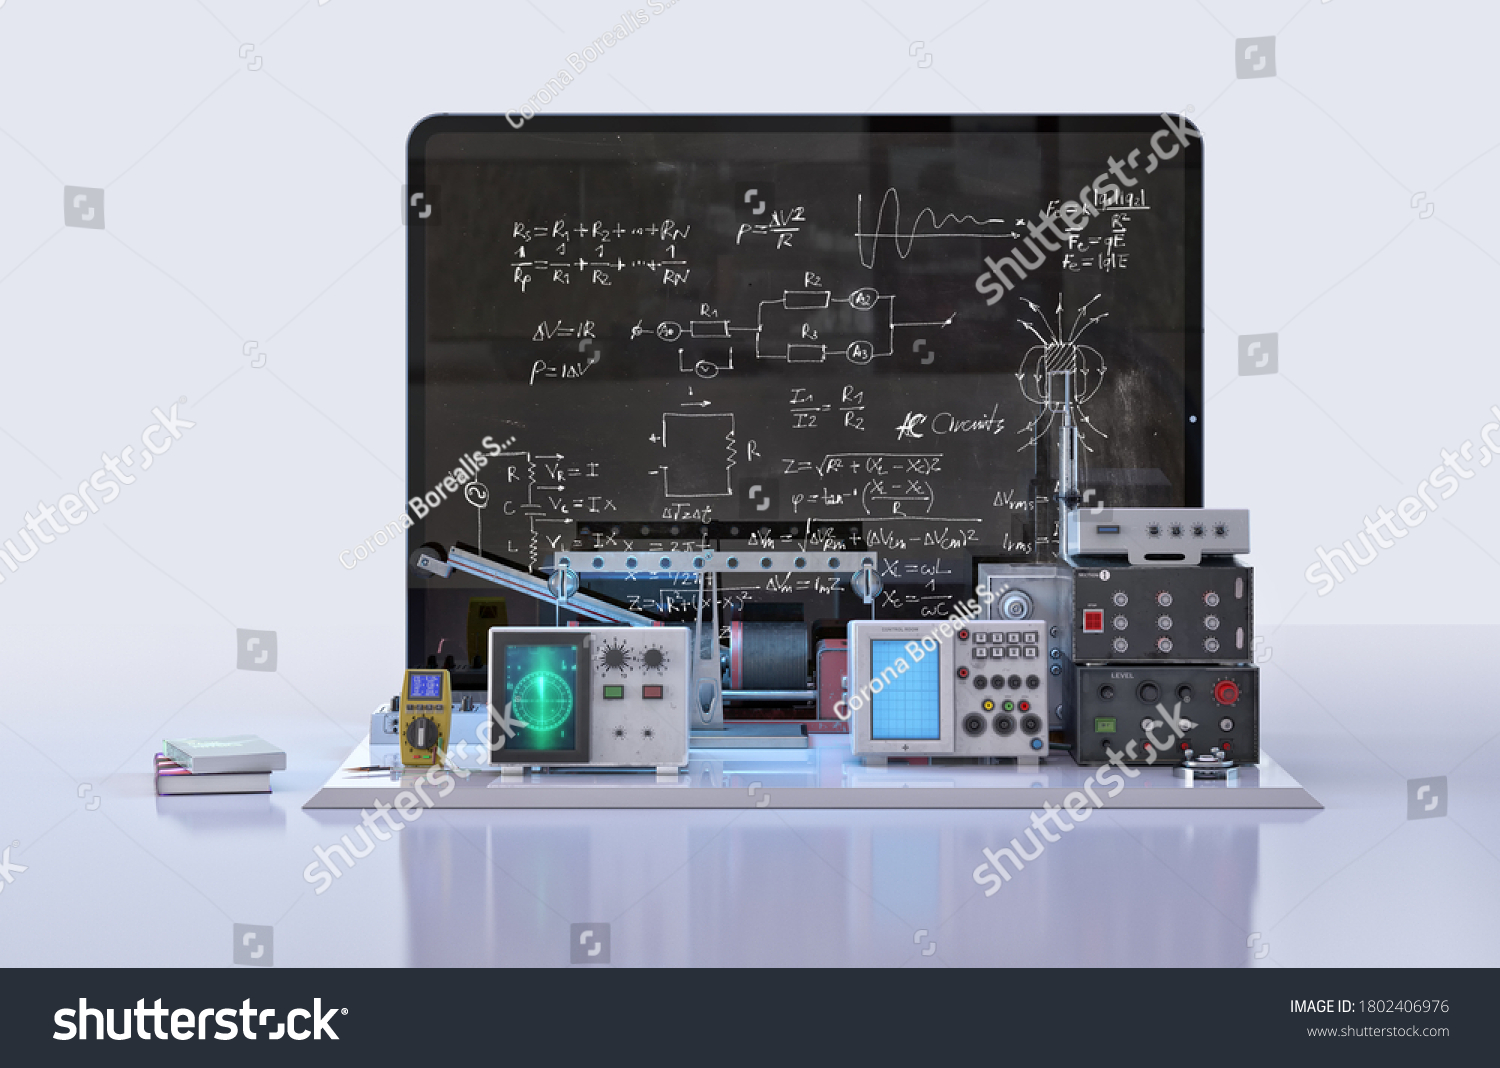 physics lab equipments